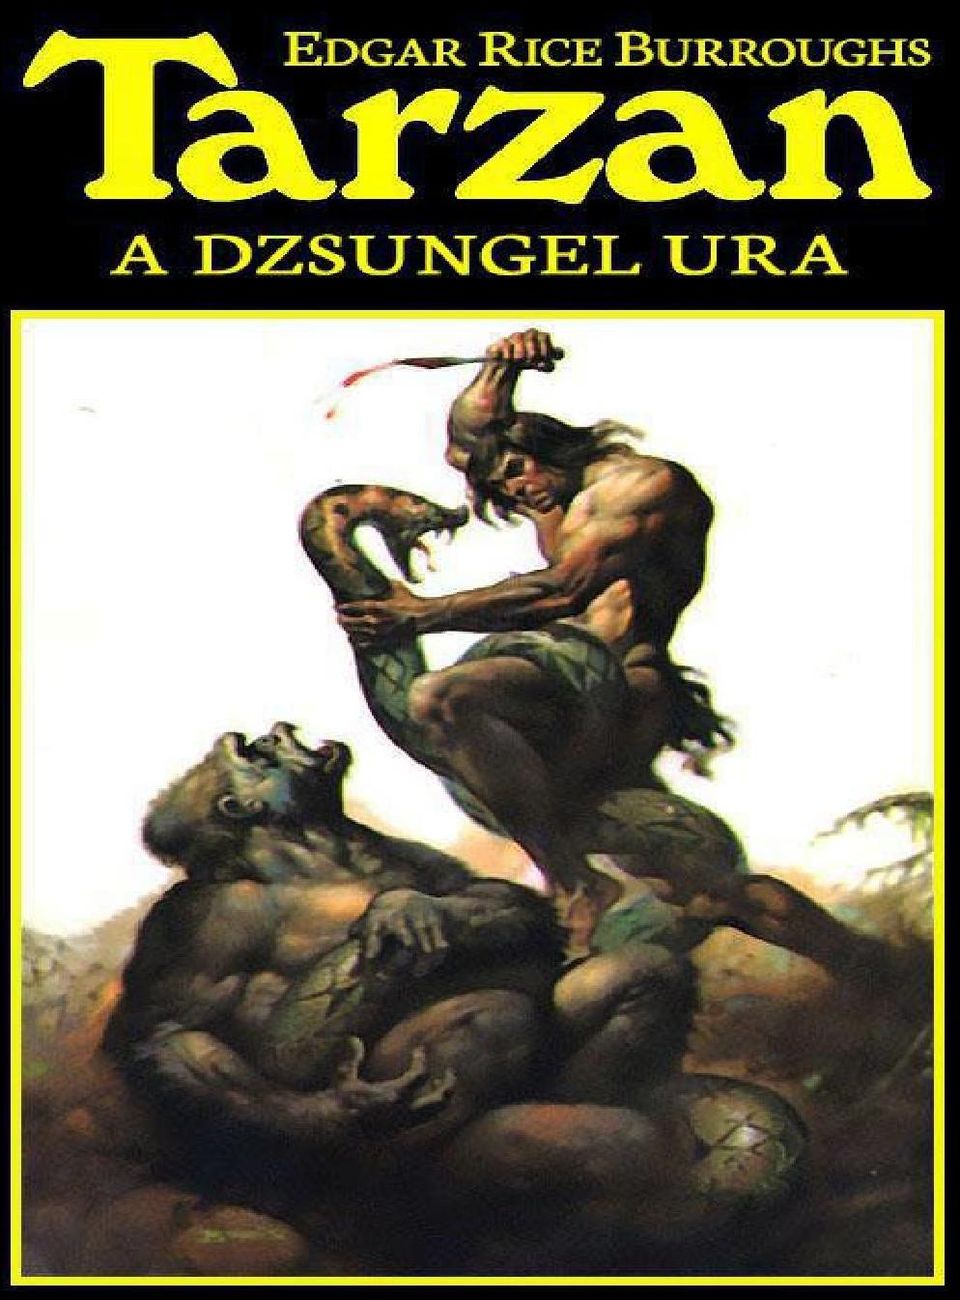 Edgar Rice Burroughs TARZAN, A DZSUNGEL URA - PDF Free Download